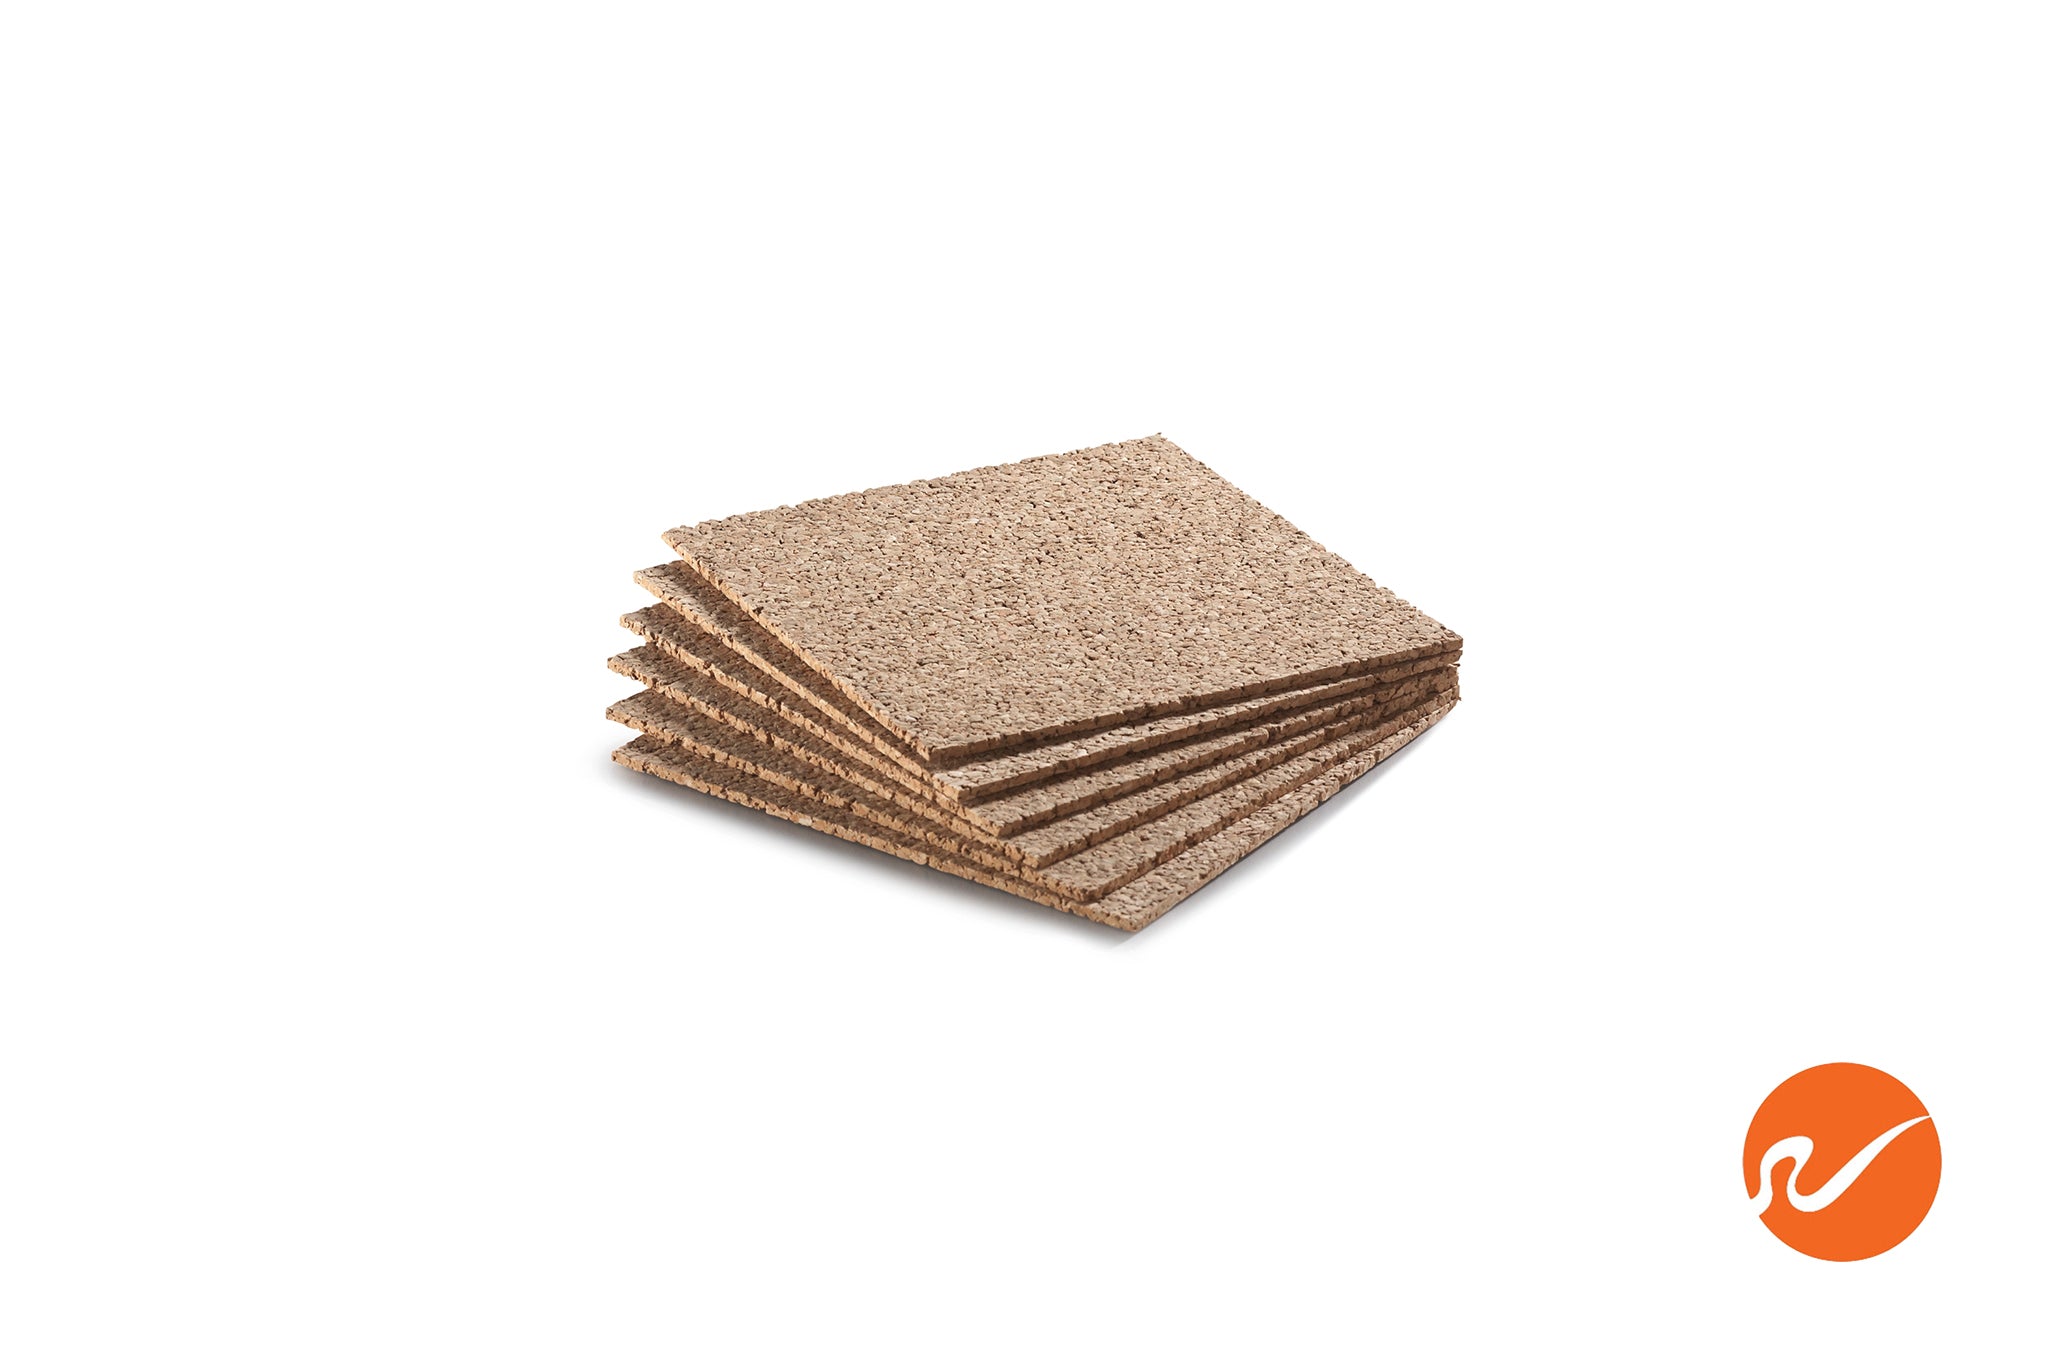 1/8 x 6 Cork Squares - buy cork pads, trivets